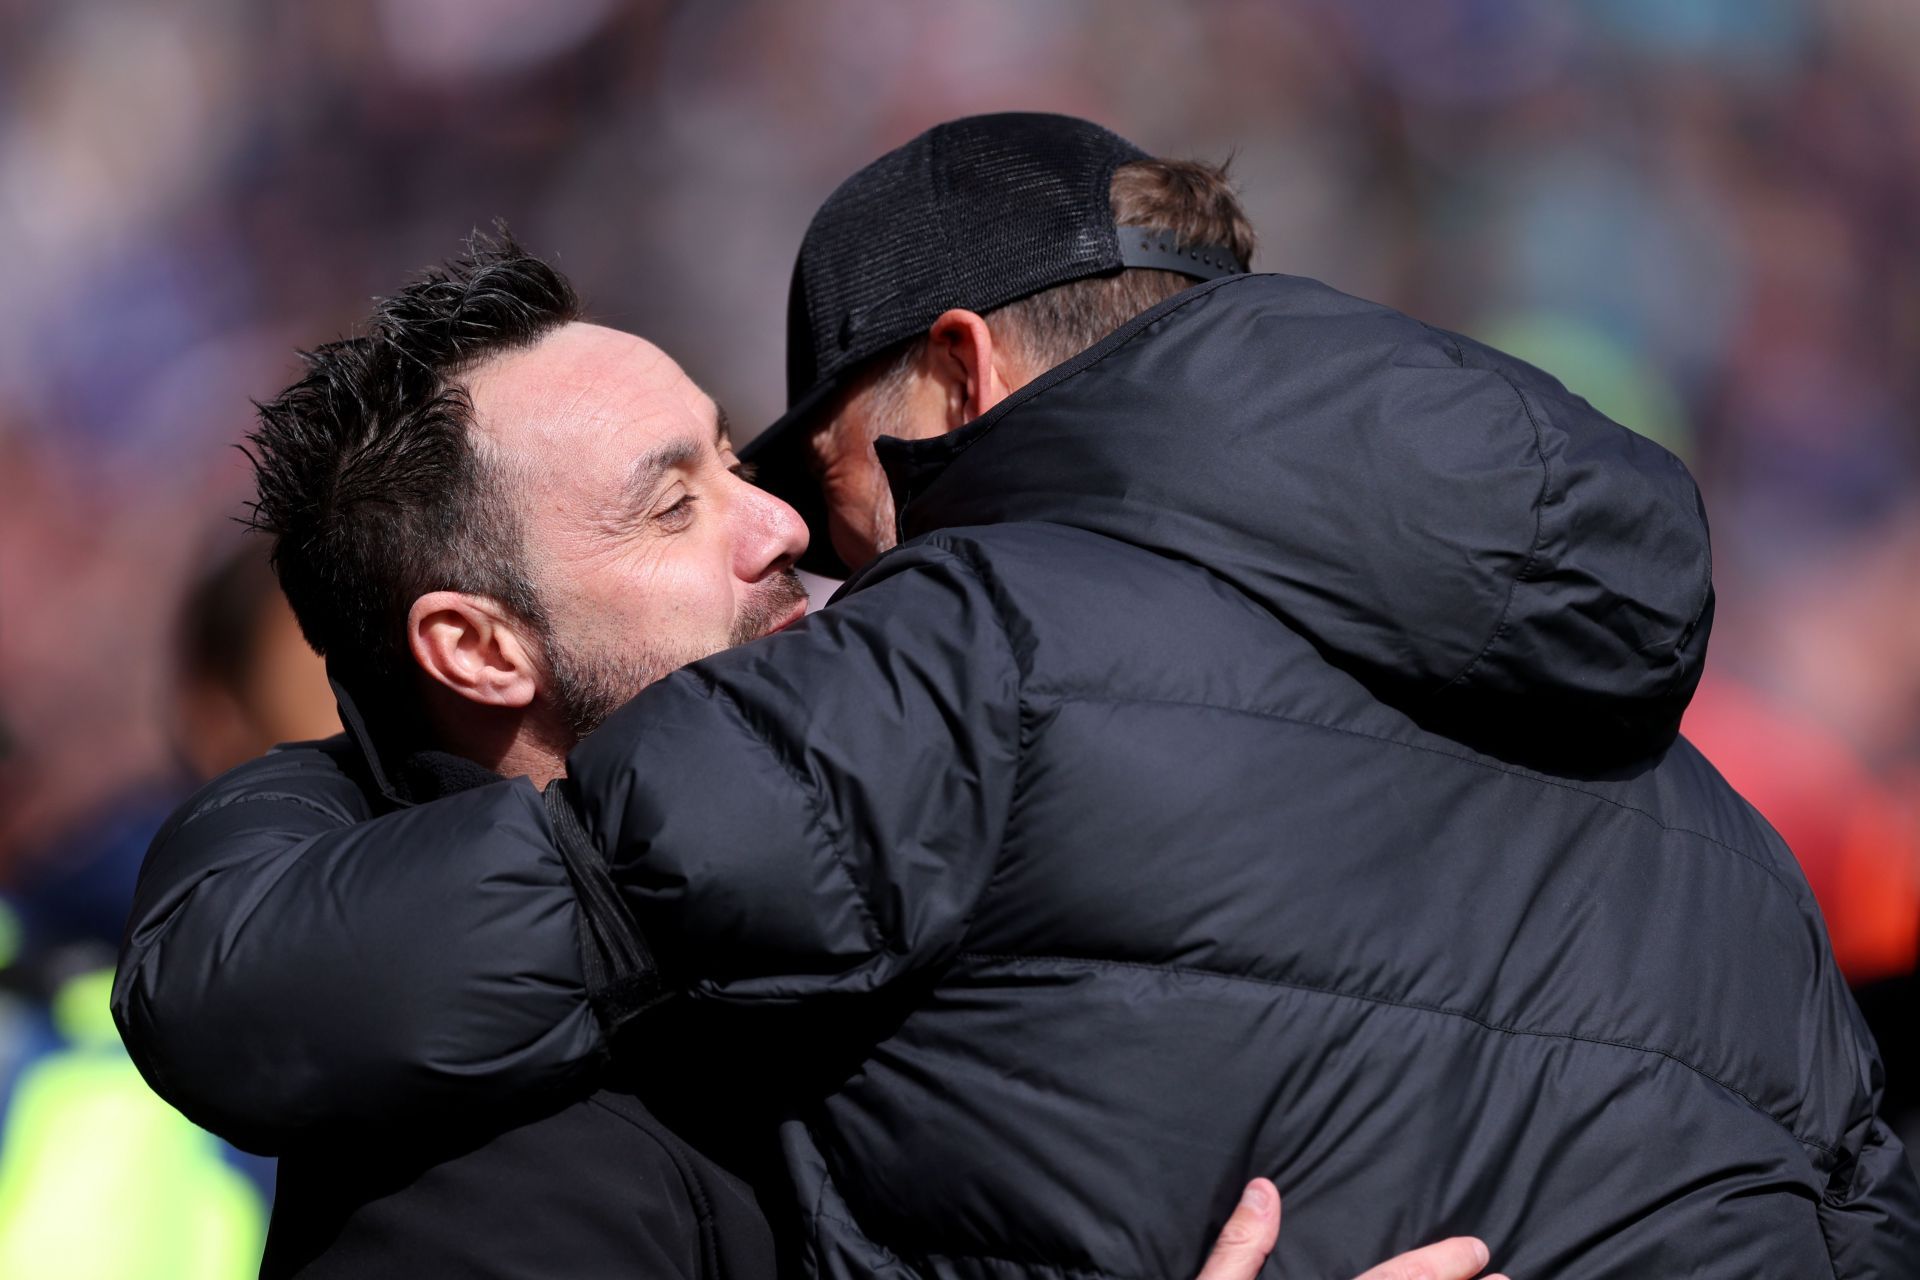  Brighton boss De Zerbi (left) embraces his Liverpool counterpart Jurgen Klopp